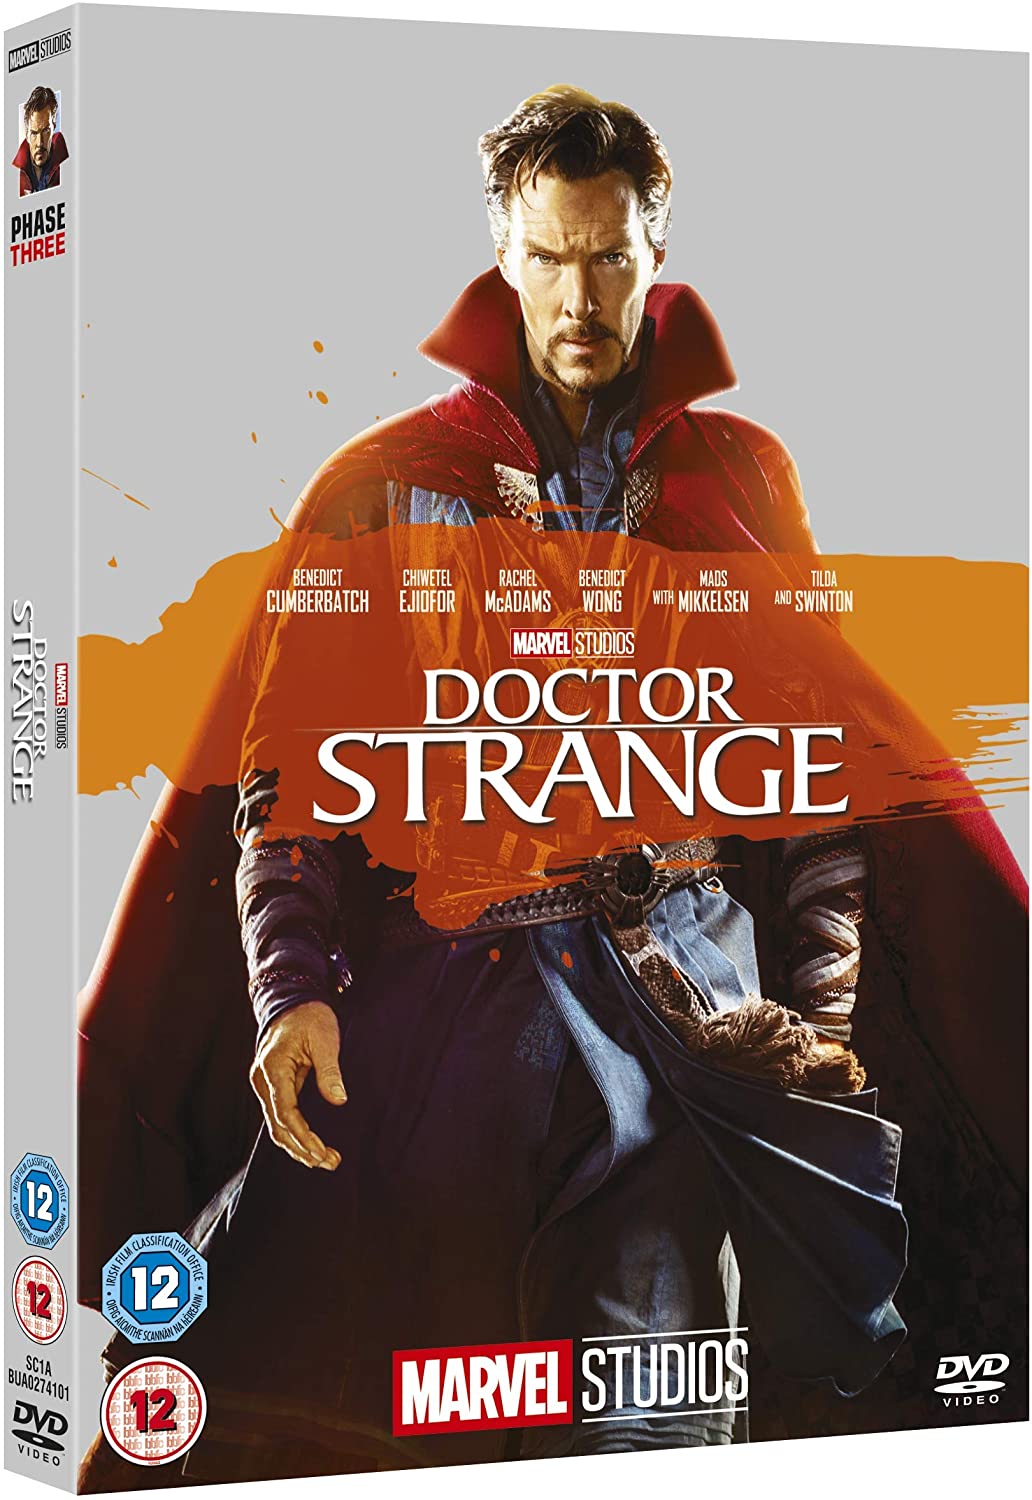 Doctor Strange - Action/Adventure [DVD]